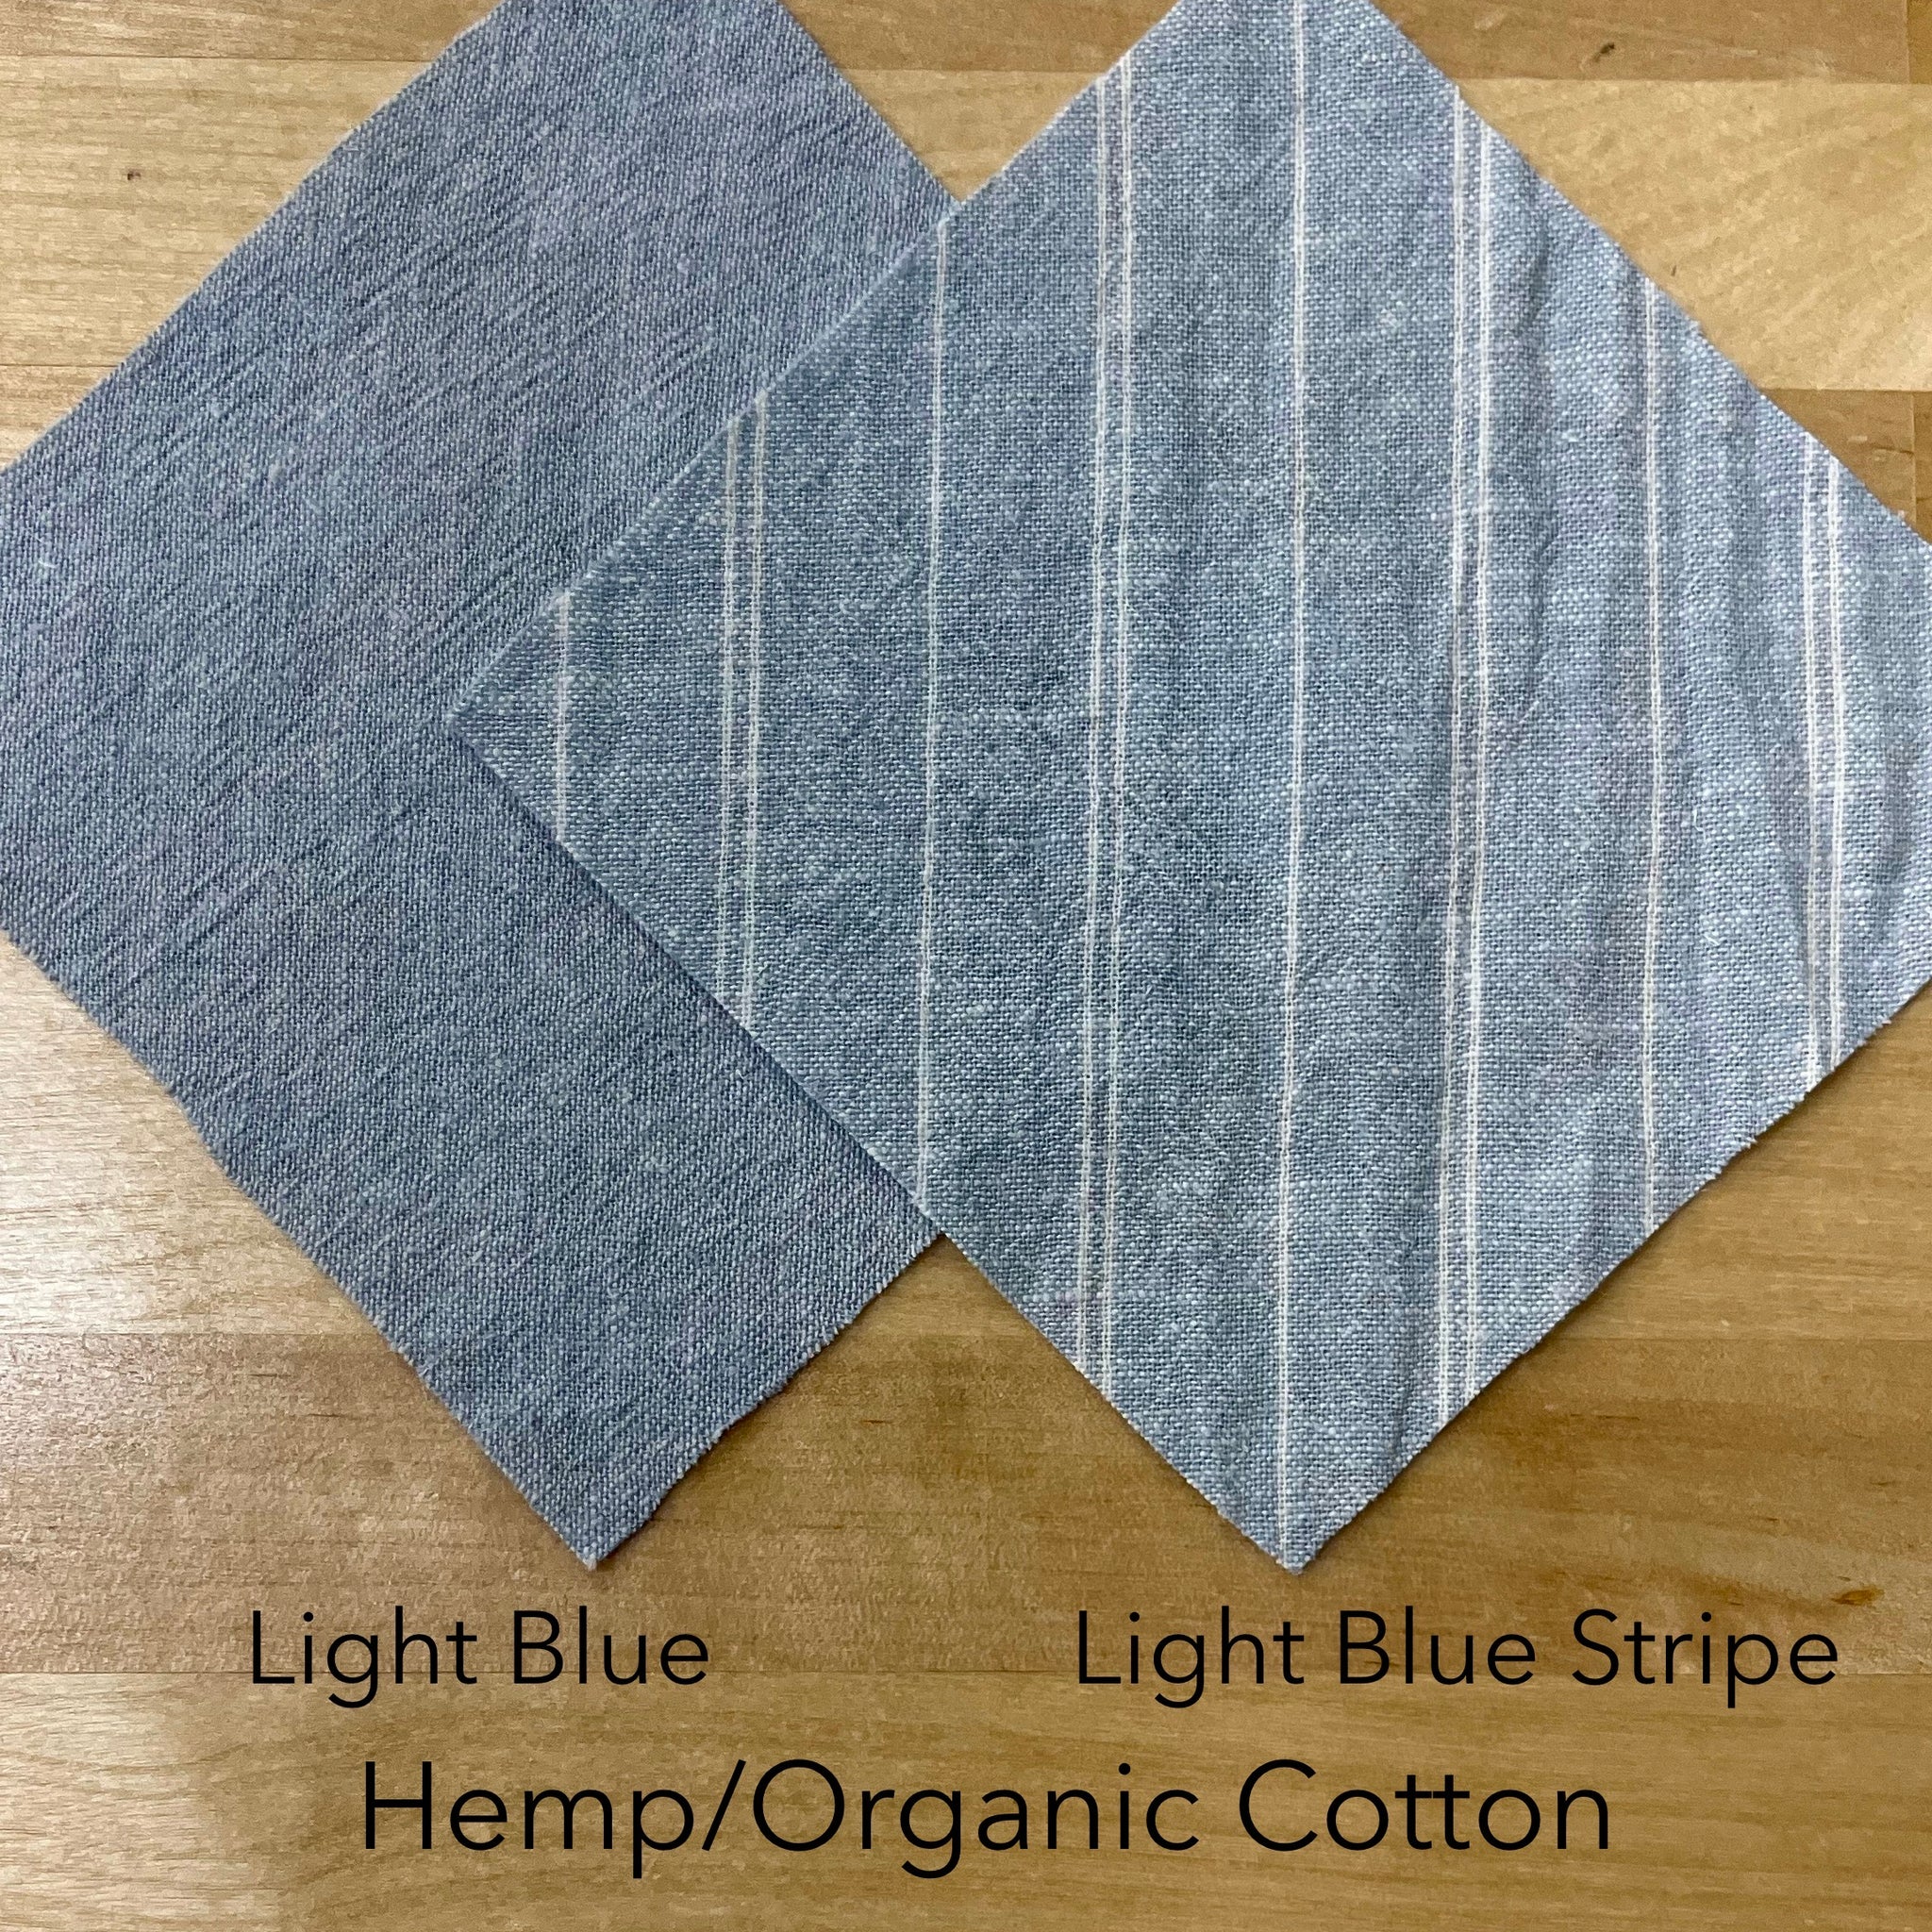 Bias-Cut Reversible Dress in Hemp/Organic Cotton